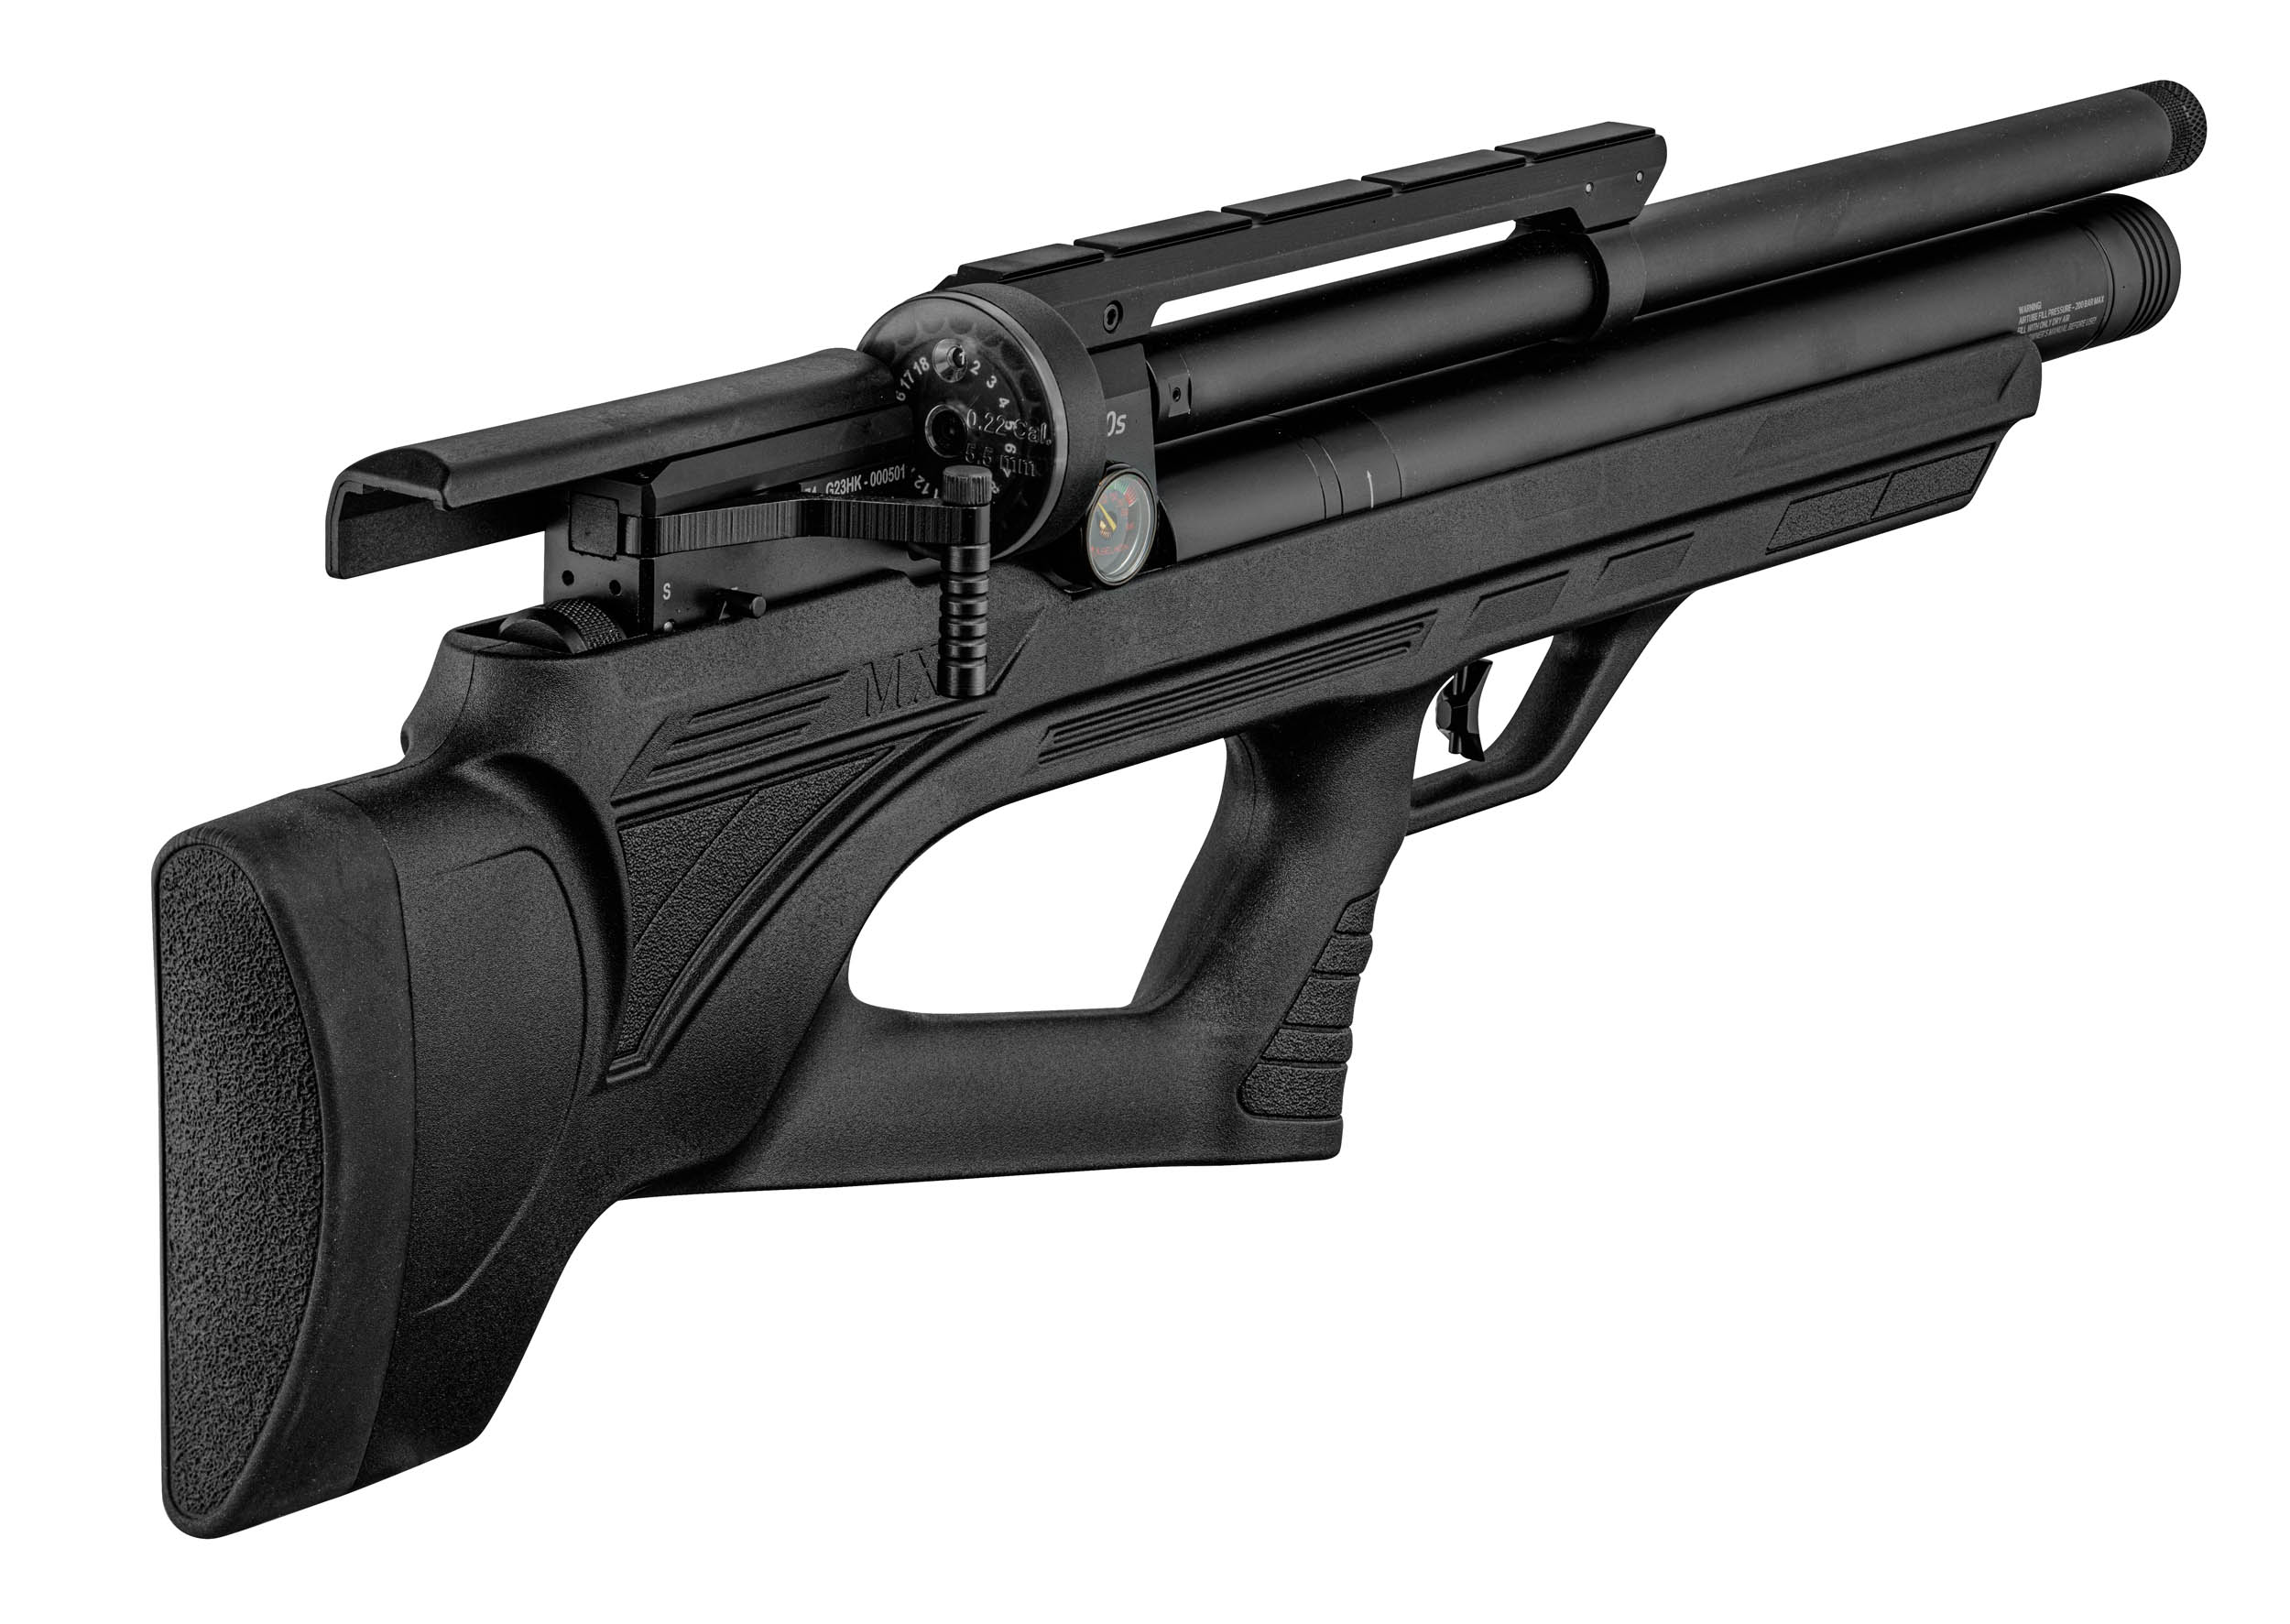 LUNETTE DE VISEE RIFLESCOPE 4x32 + MONTAGE 11mm - Guns And Co